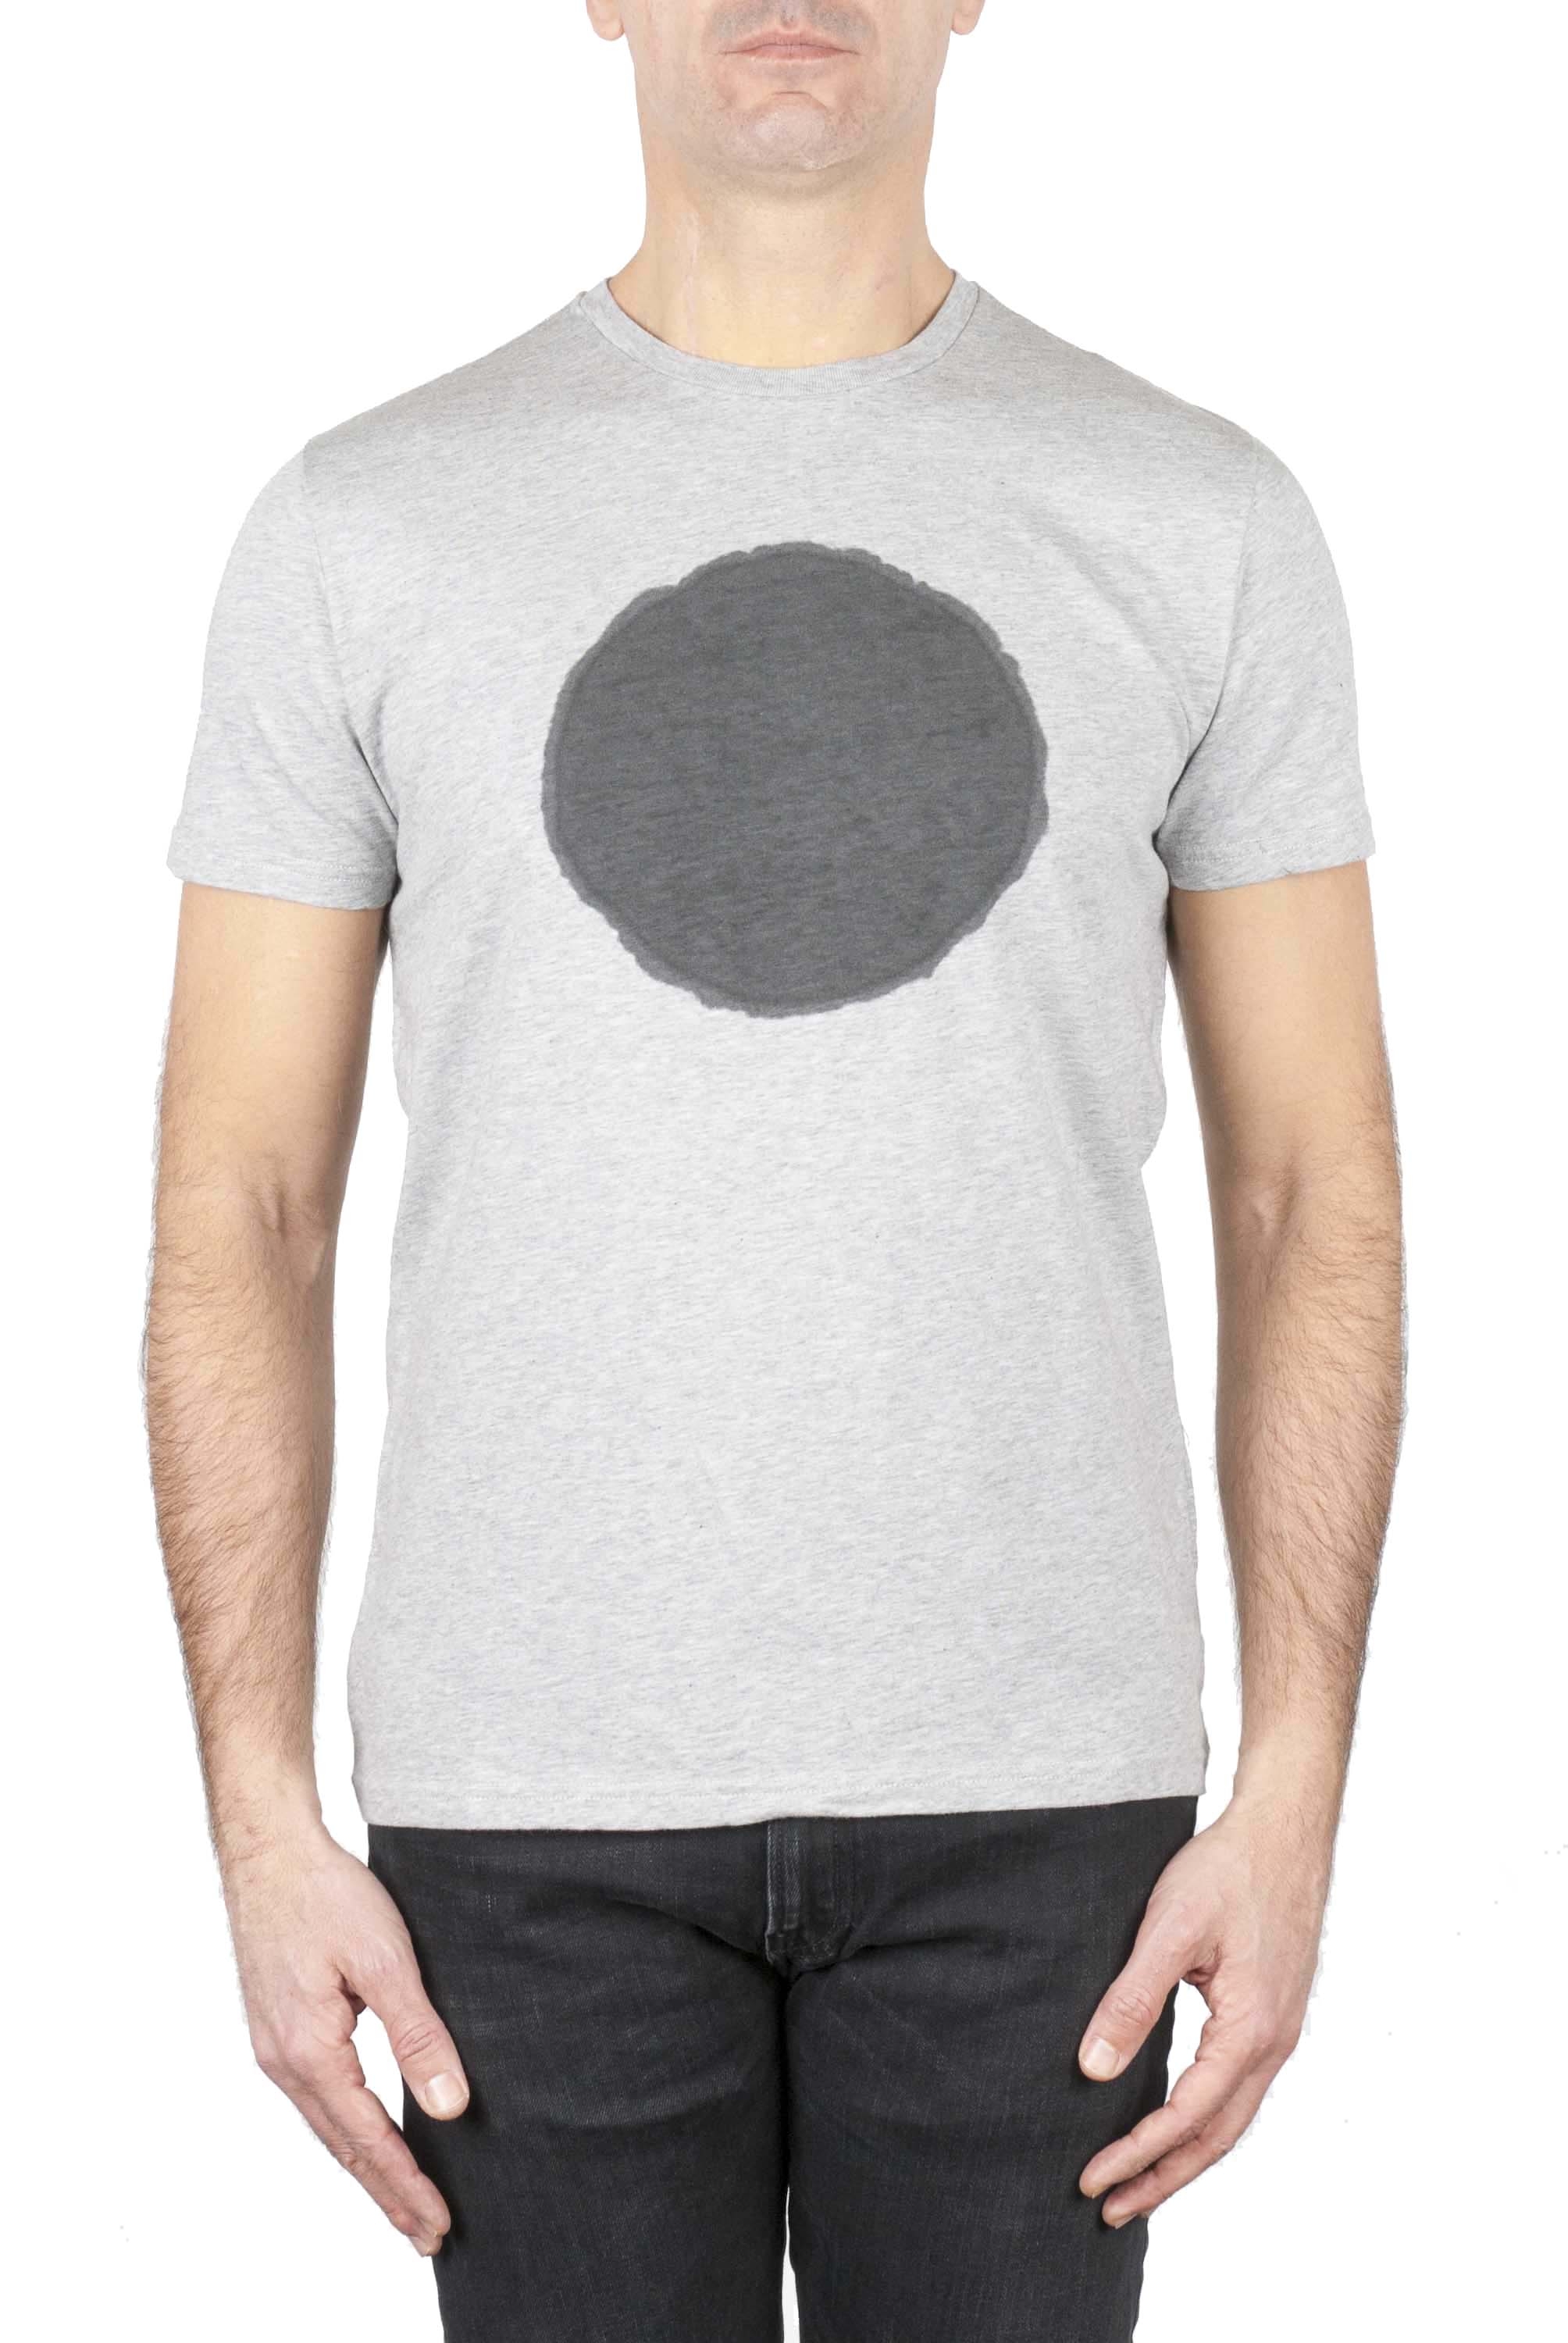 SBU 02846_2020SS 古典的な半袖綿ラウンドネックtシャツ黒とグレーのグラフィックを印刷 01